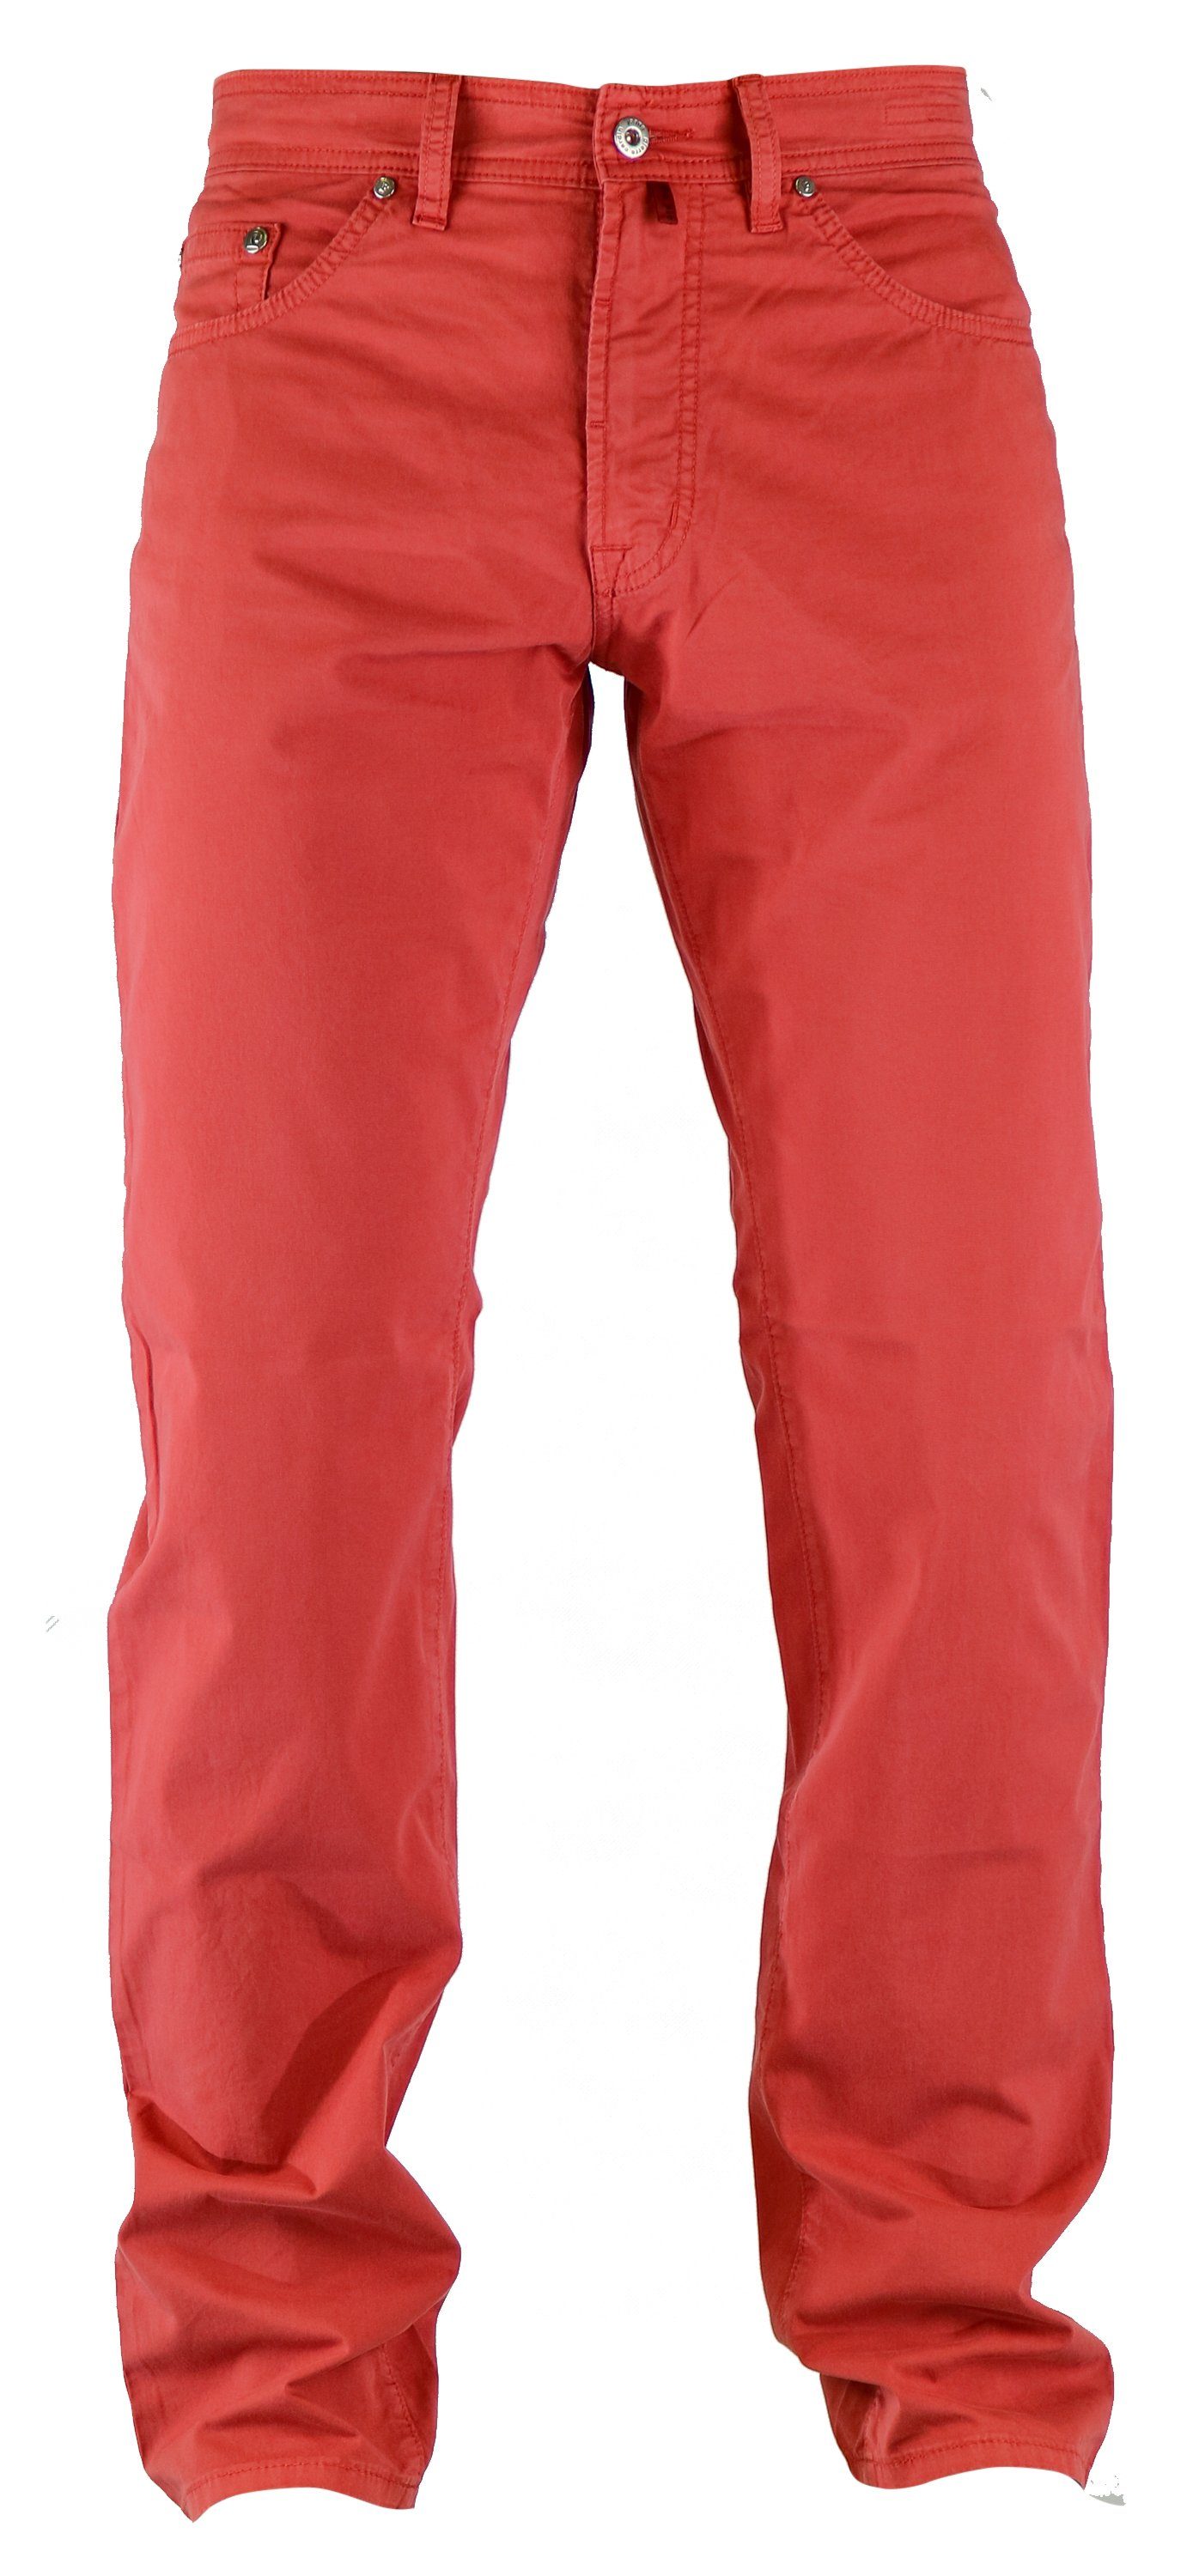 Pierre Cardin 5-Pocket-Jeans PIERRE CARDIN DEAUVILLE summer air touch red 3196 2021.95